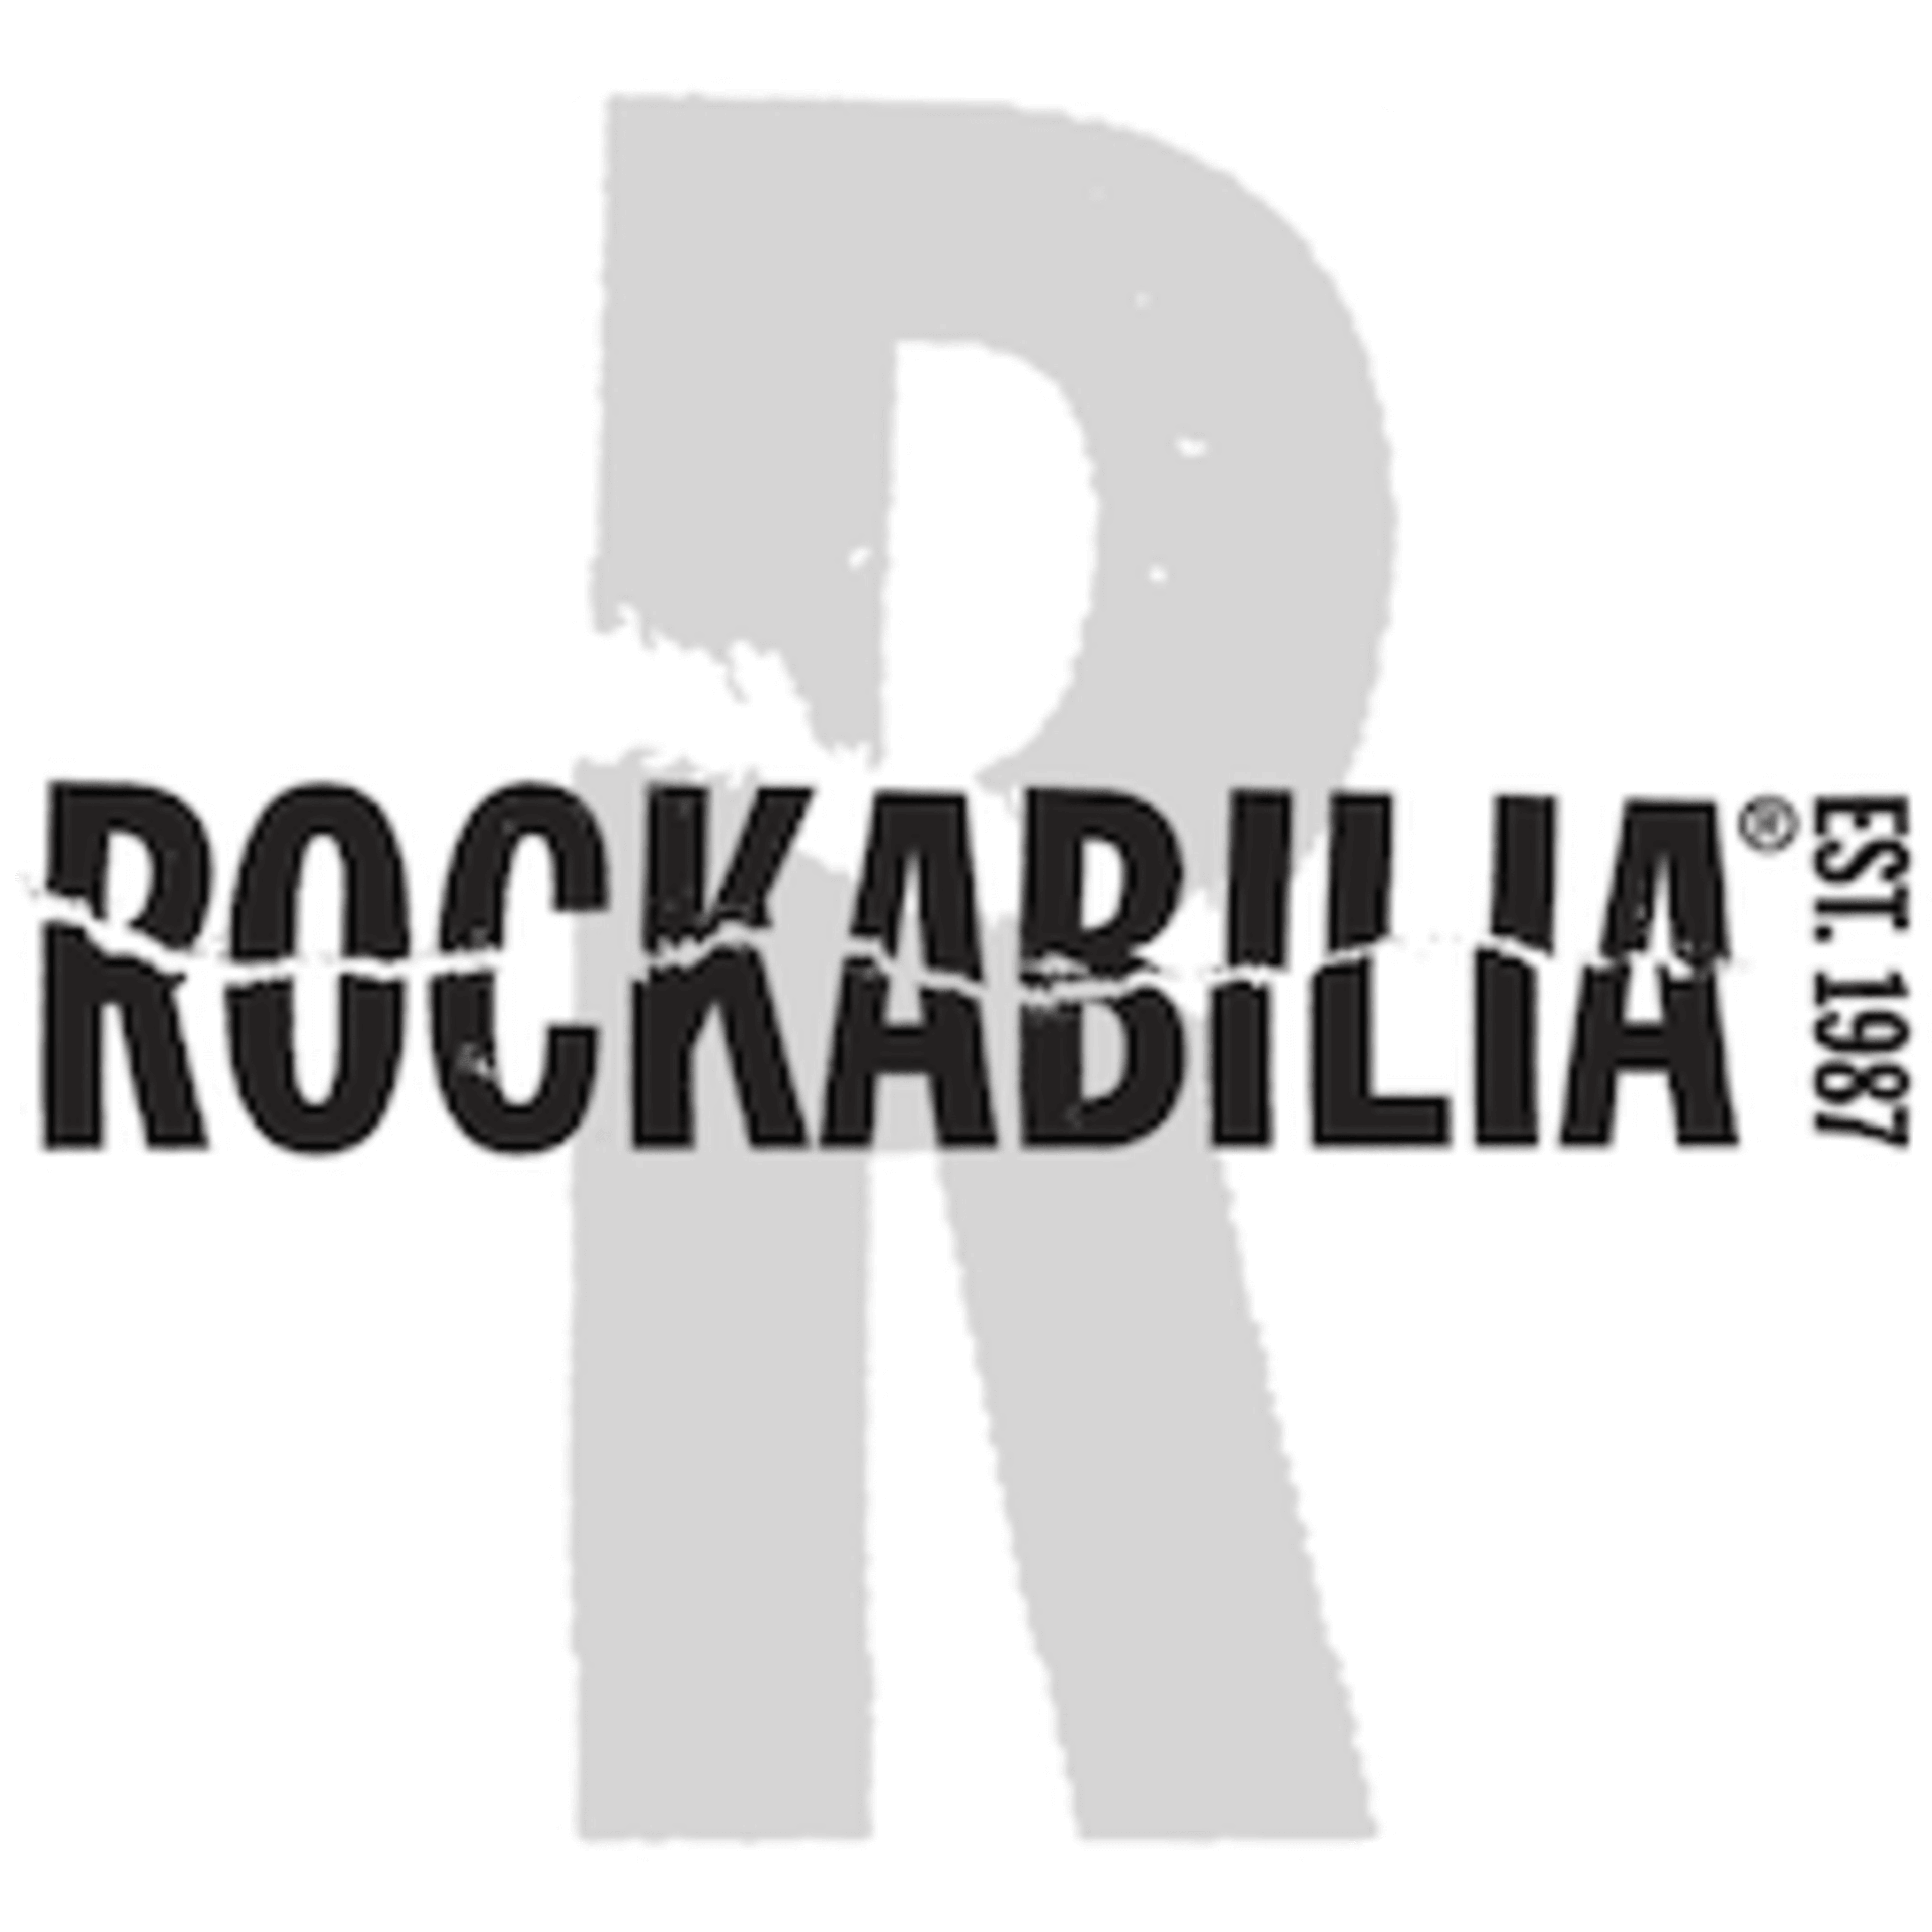 Rockabilia Code